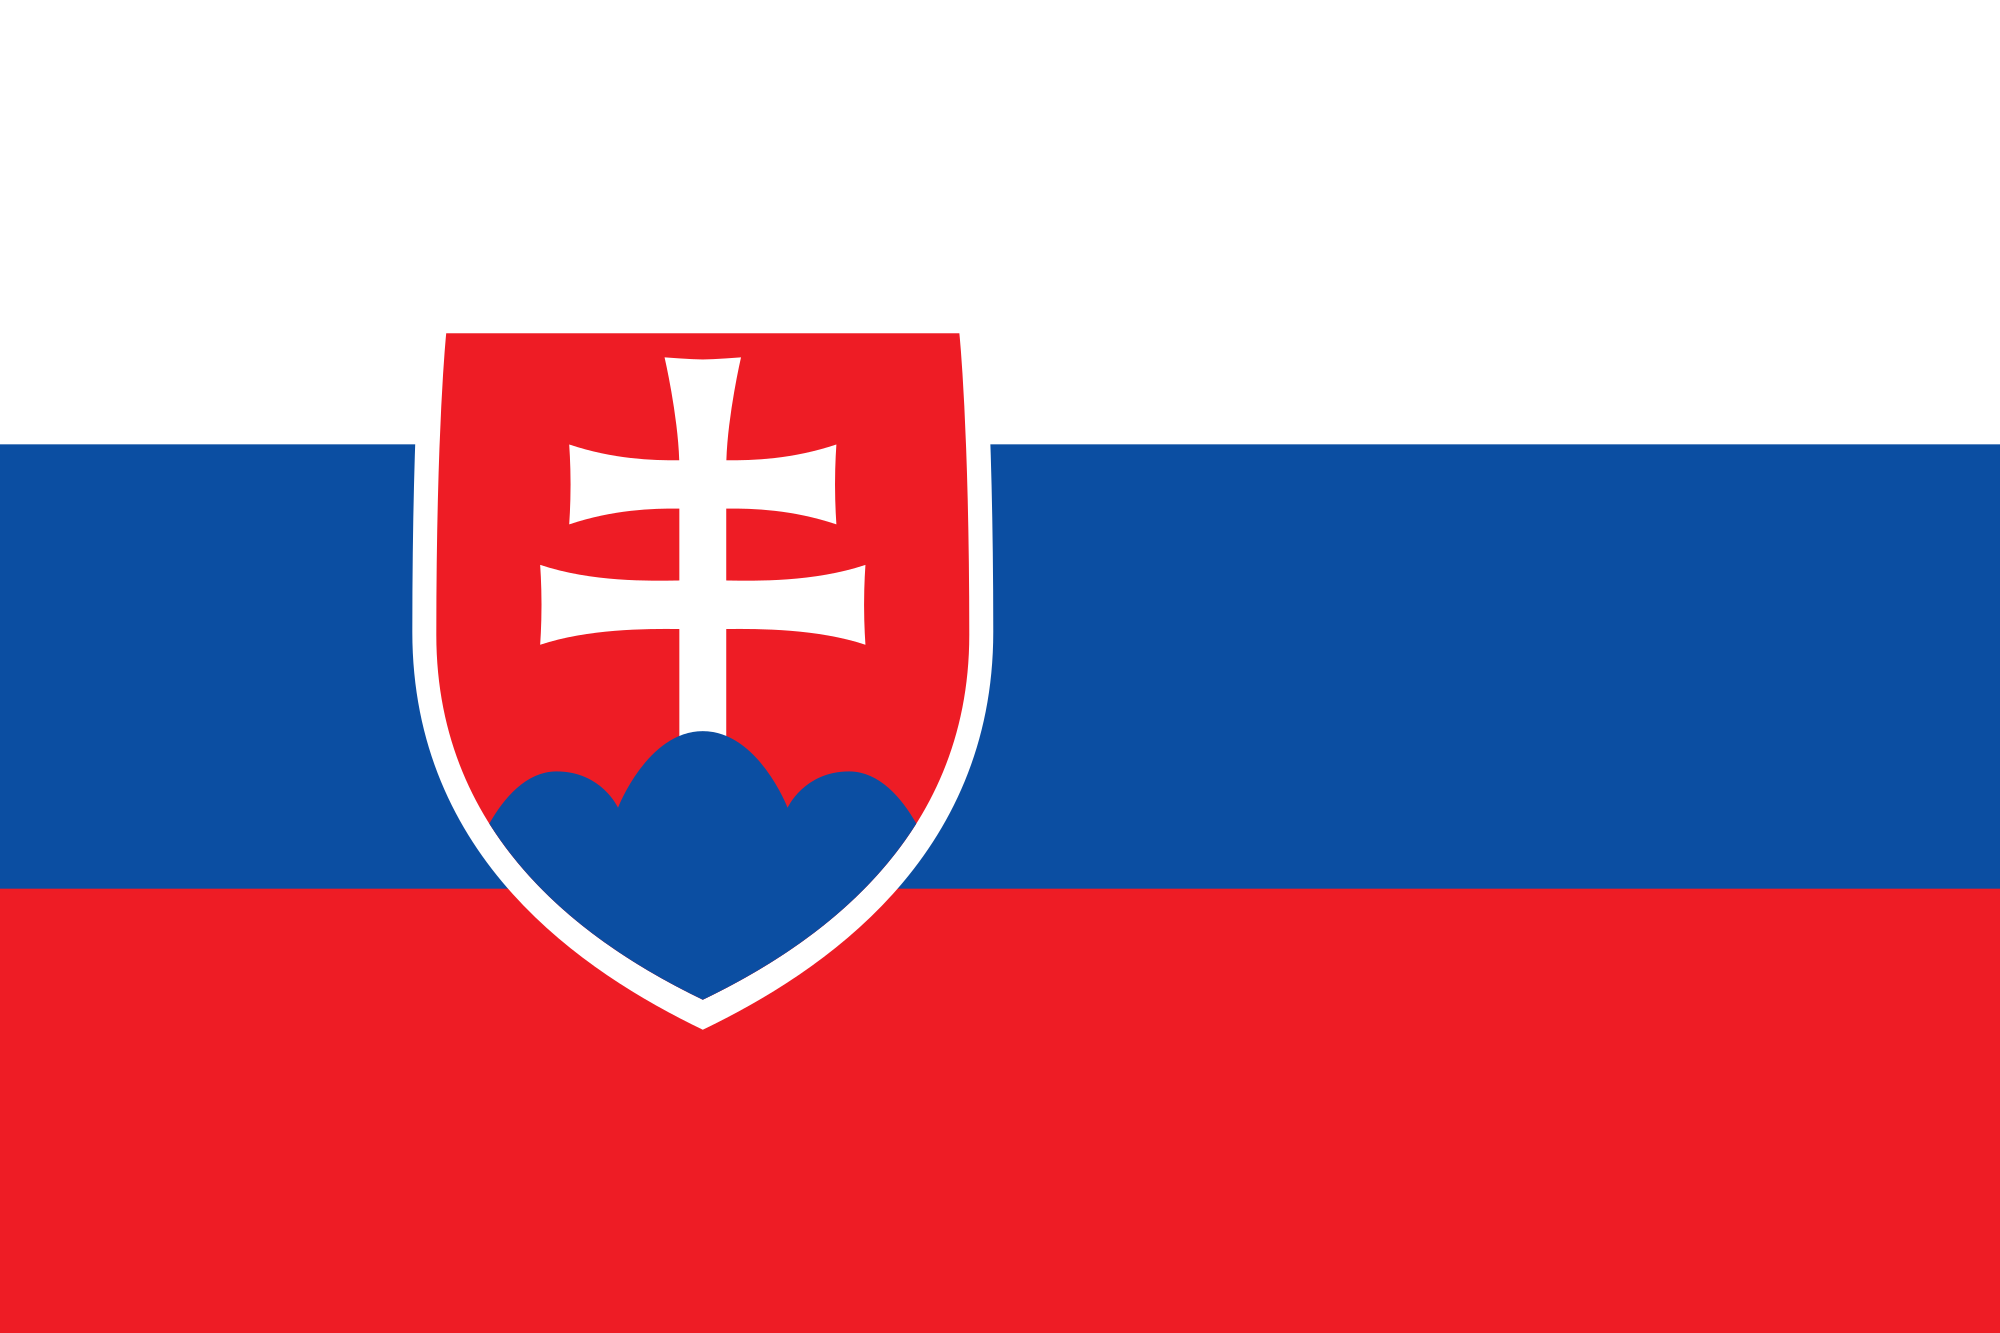 slovenskavlajka.png, 40kB